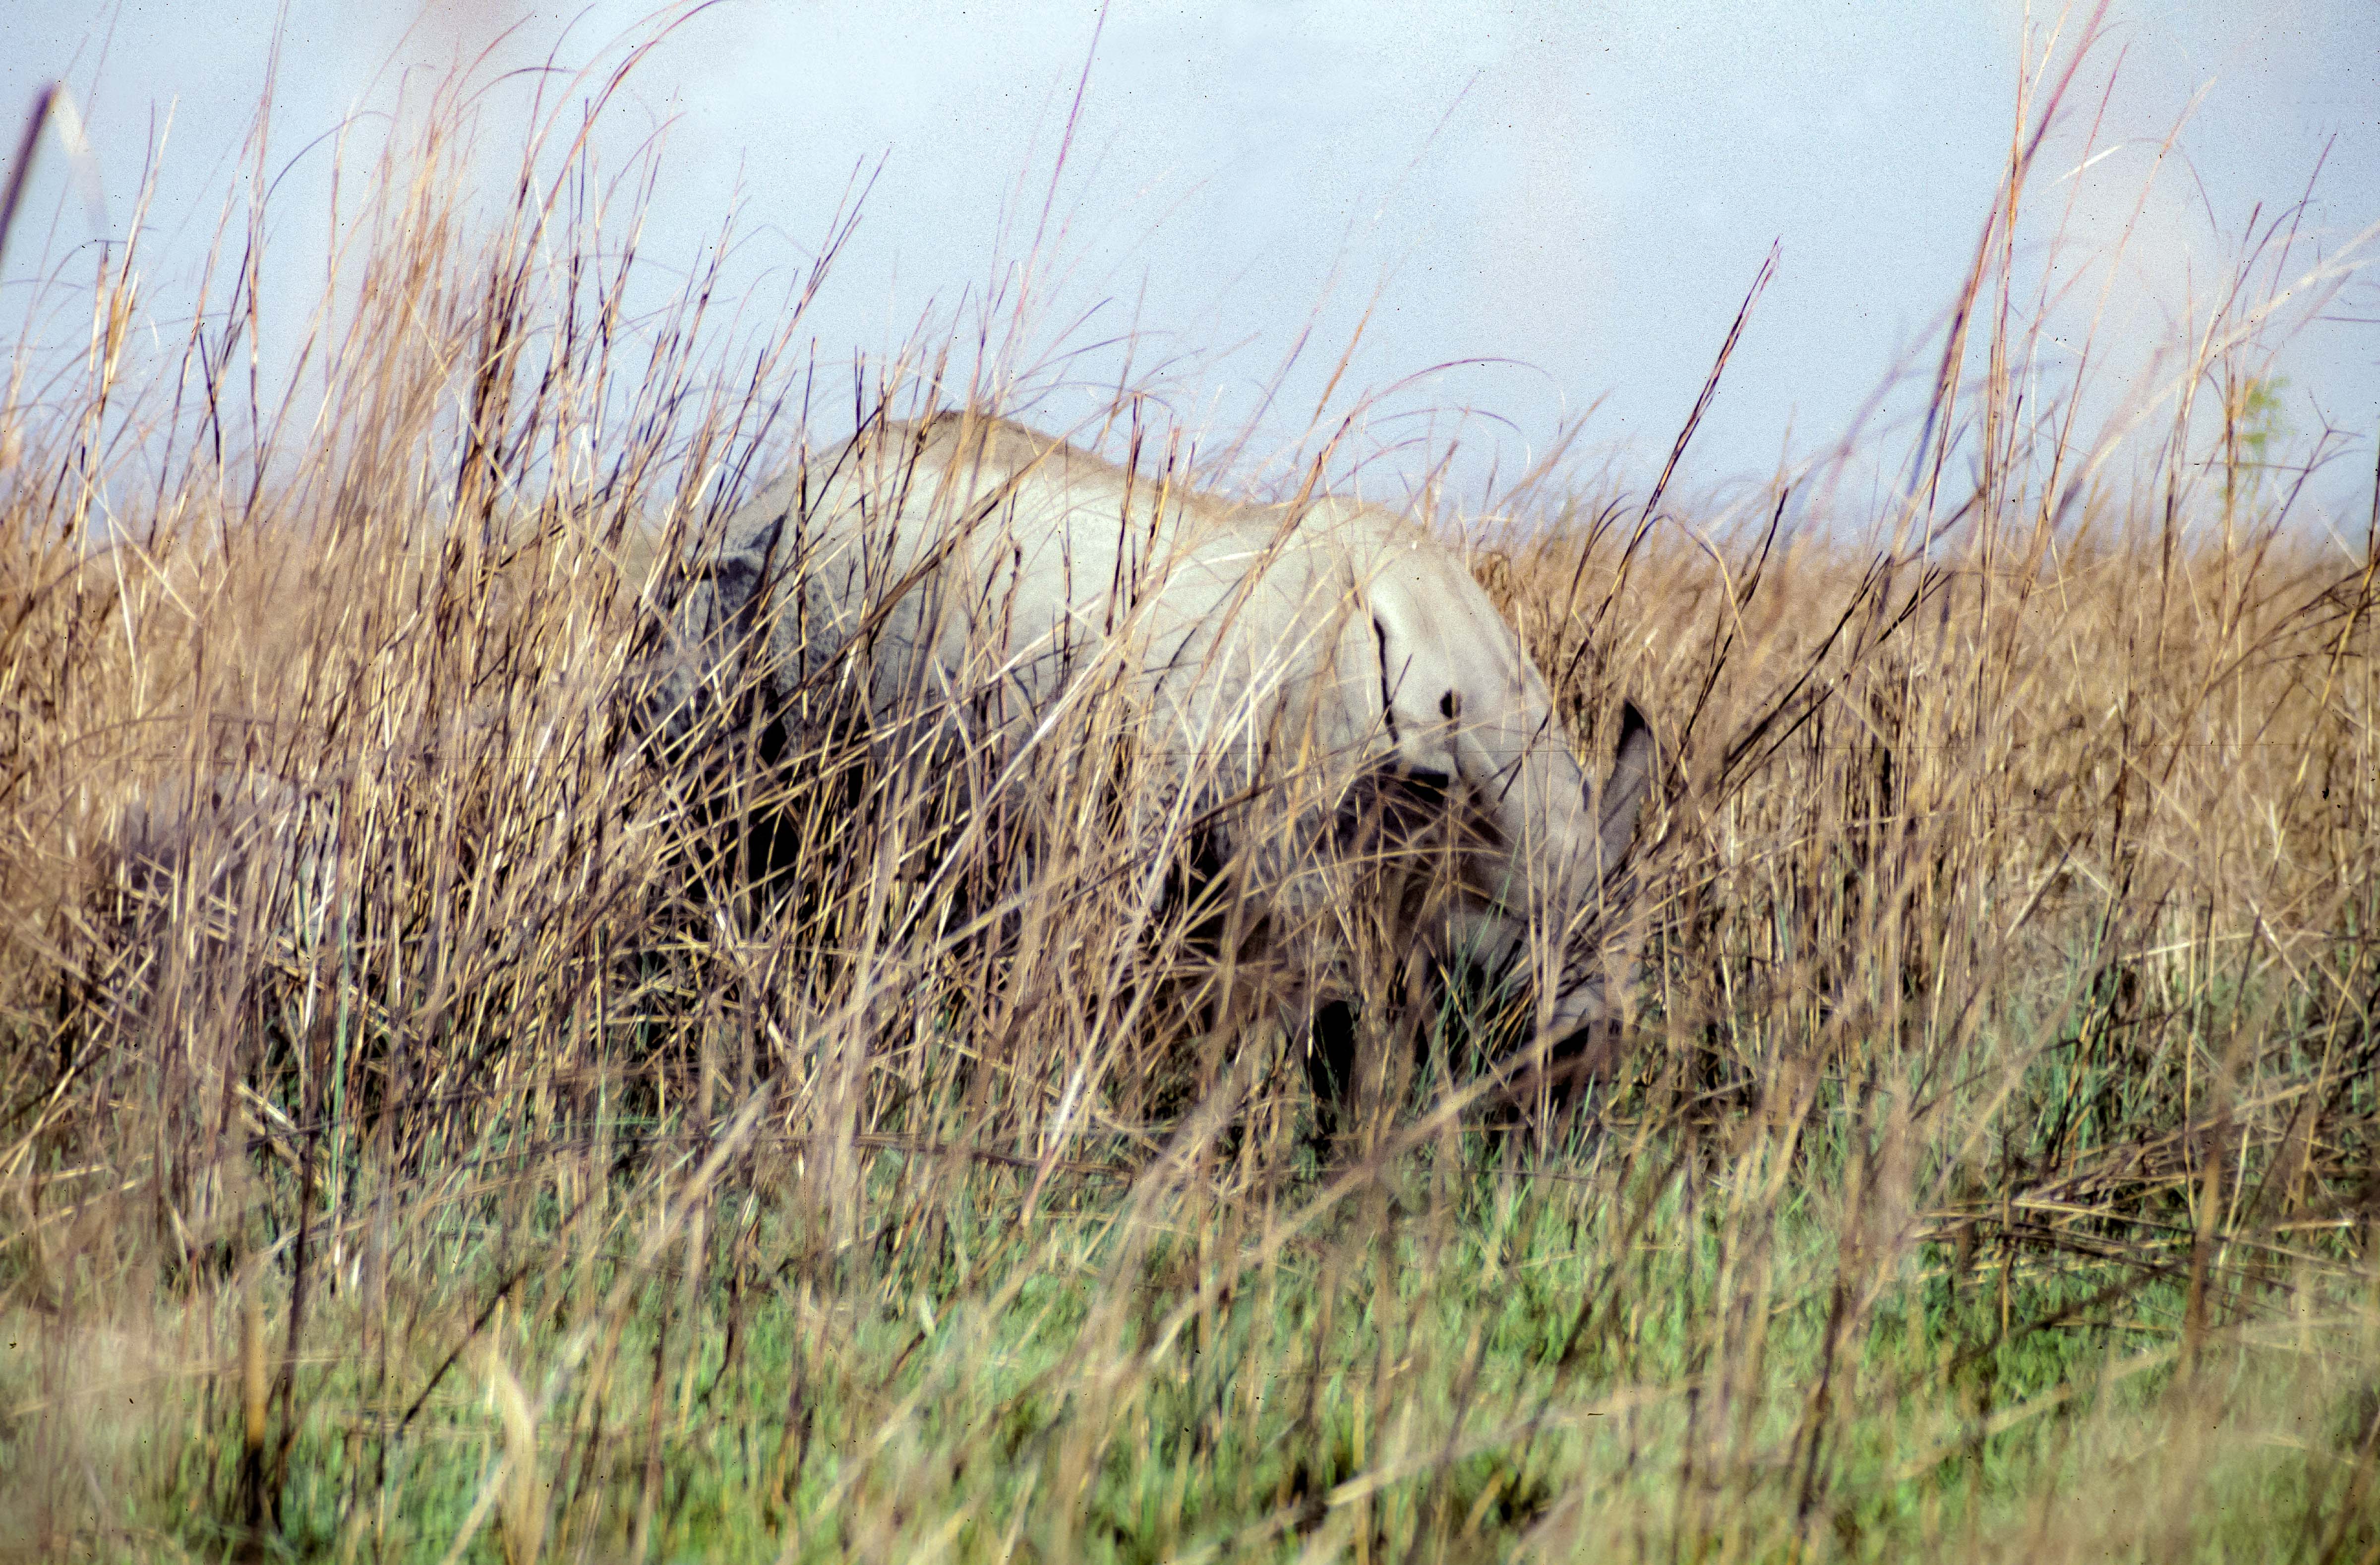 Nepal, Chitwan, Rhino I Approached on Foot, 1984